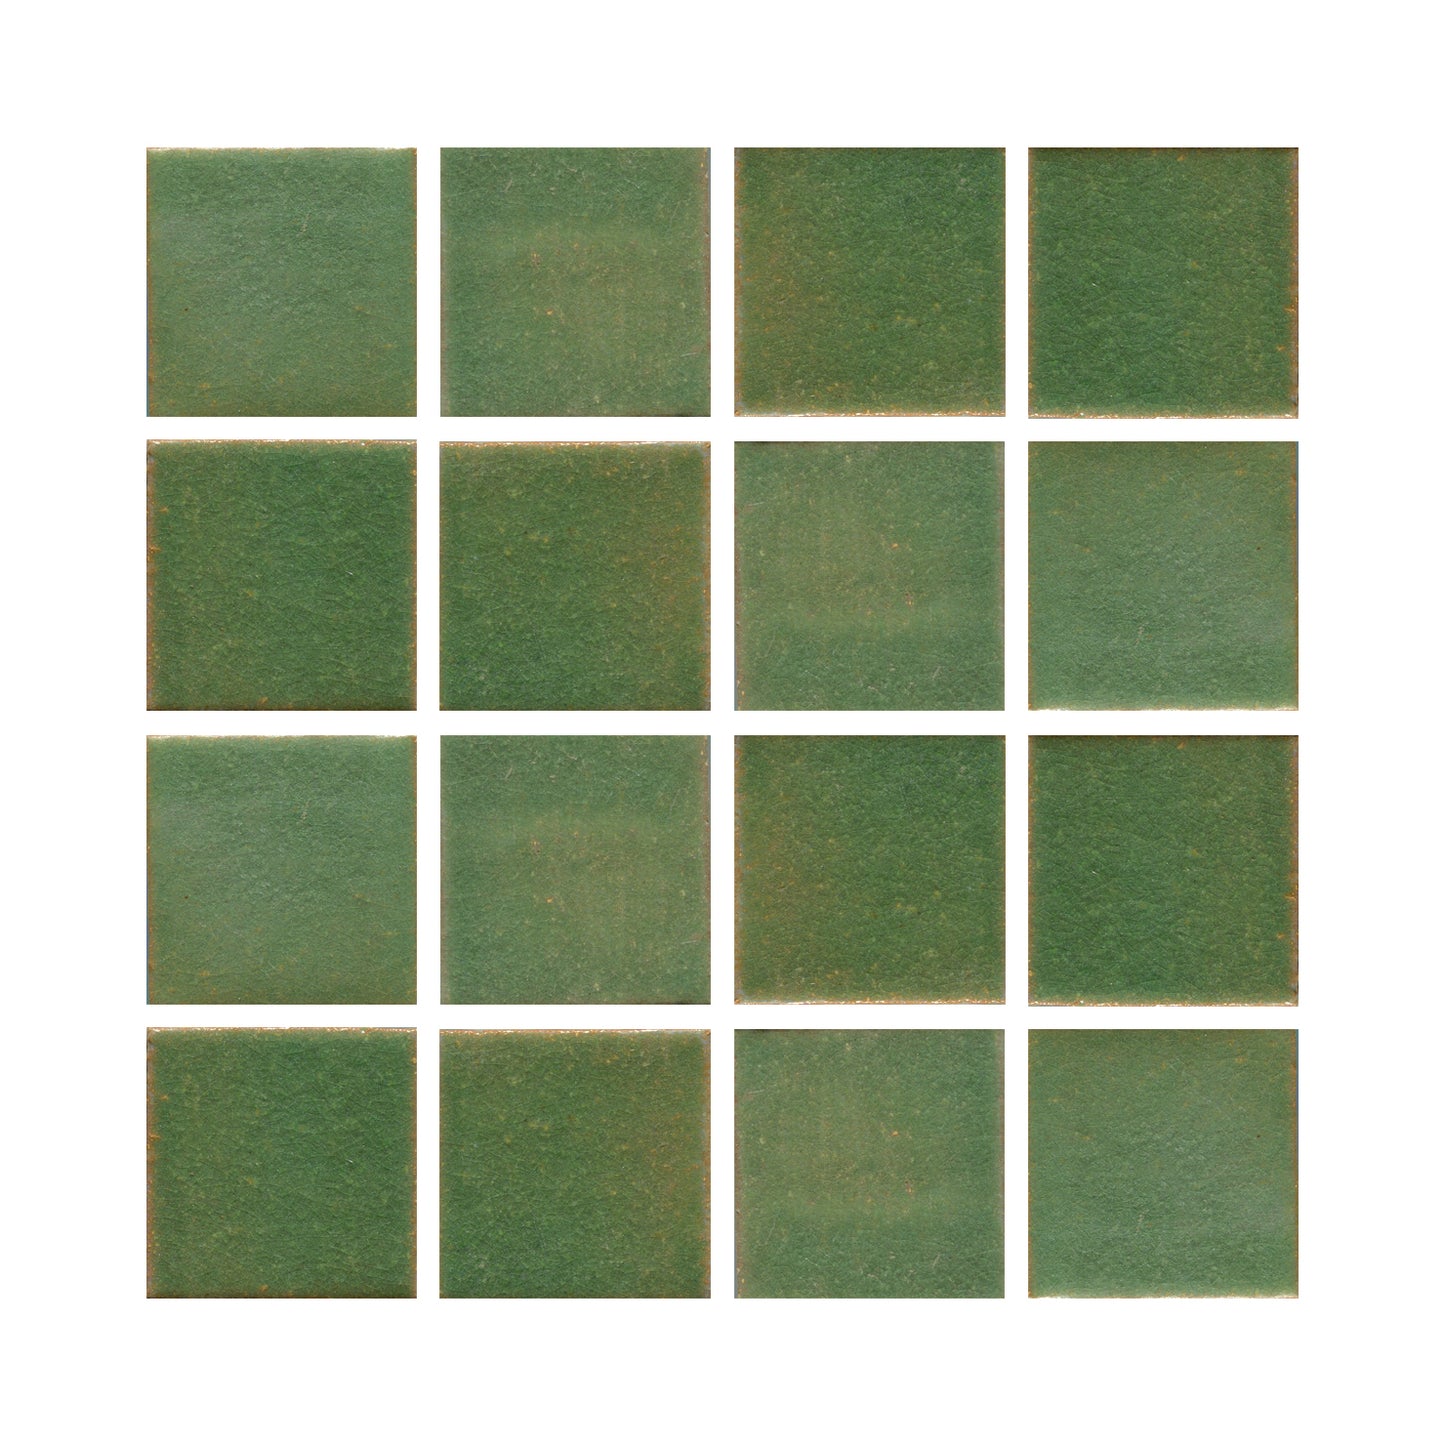 Avocado green 2x2 field tile